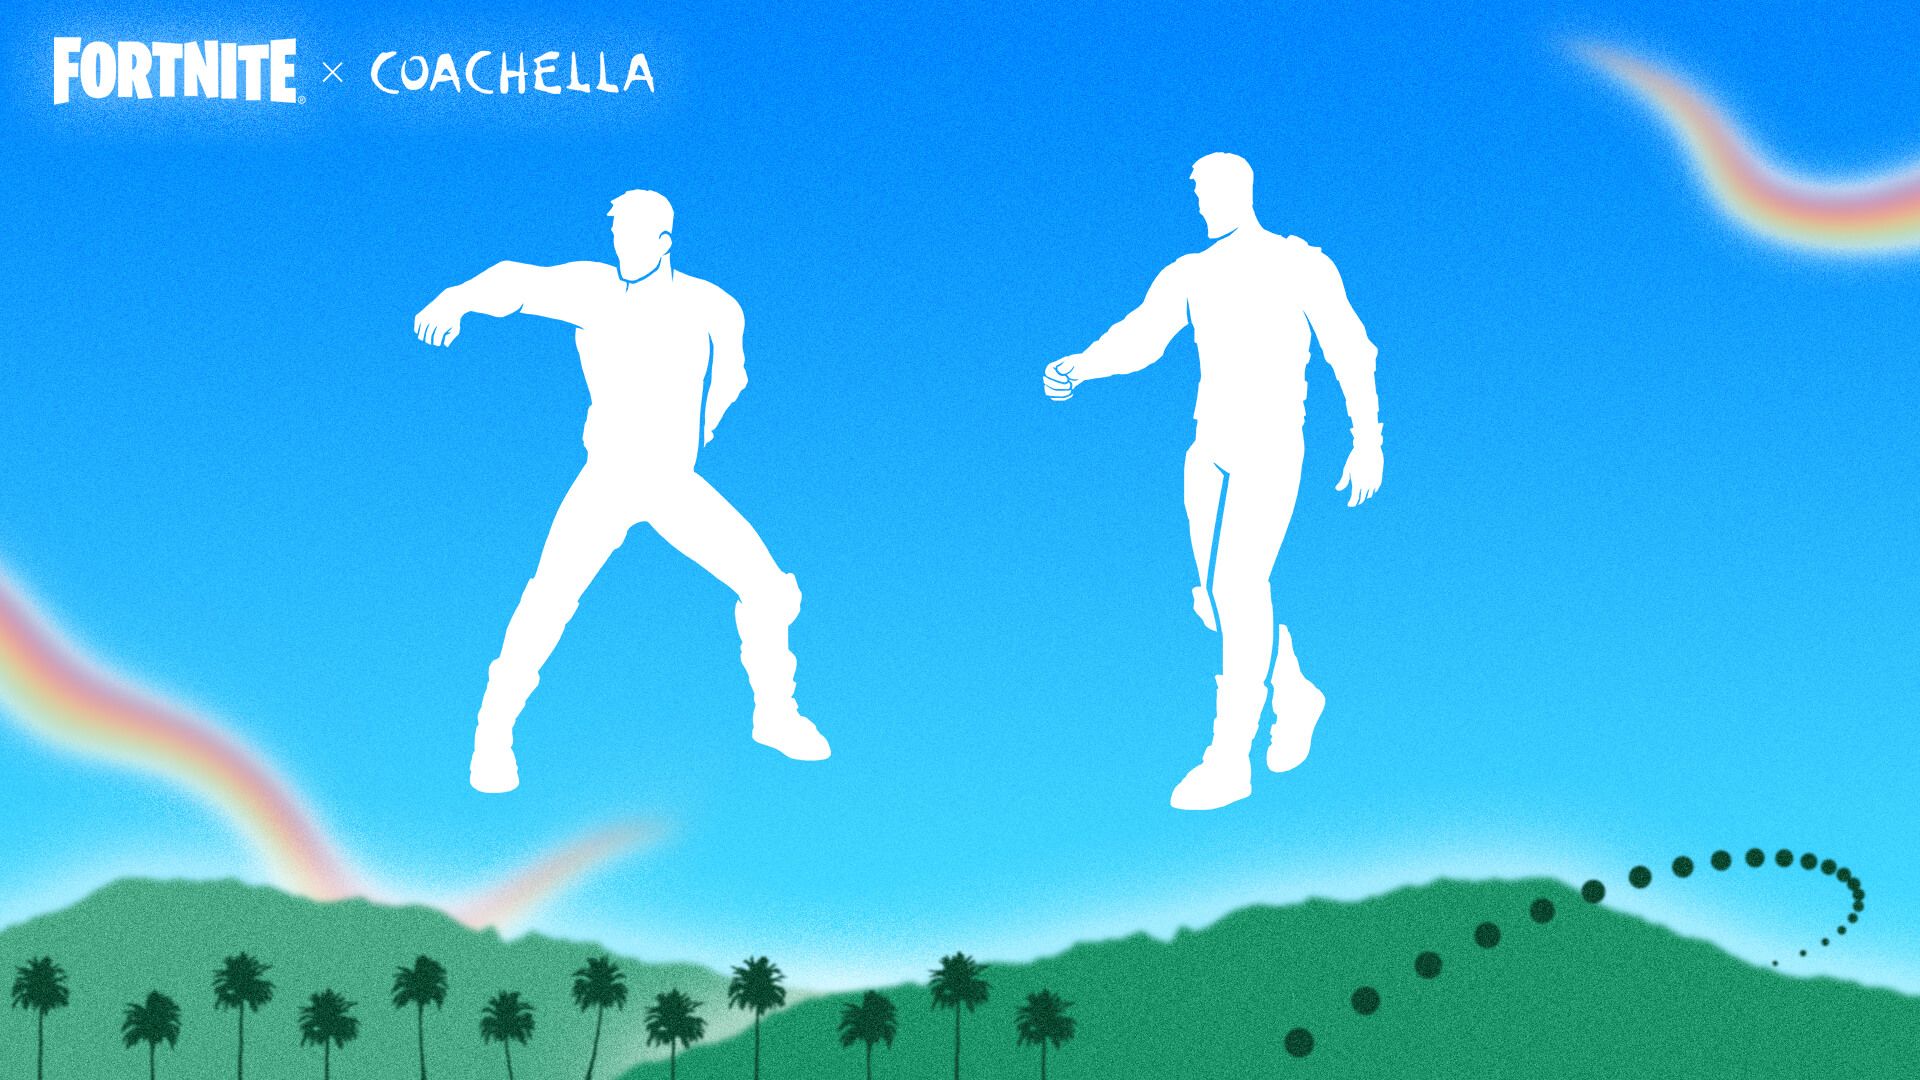 Fortnite Reveals New Coachella Set, Available April 14